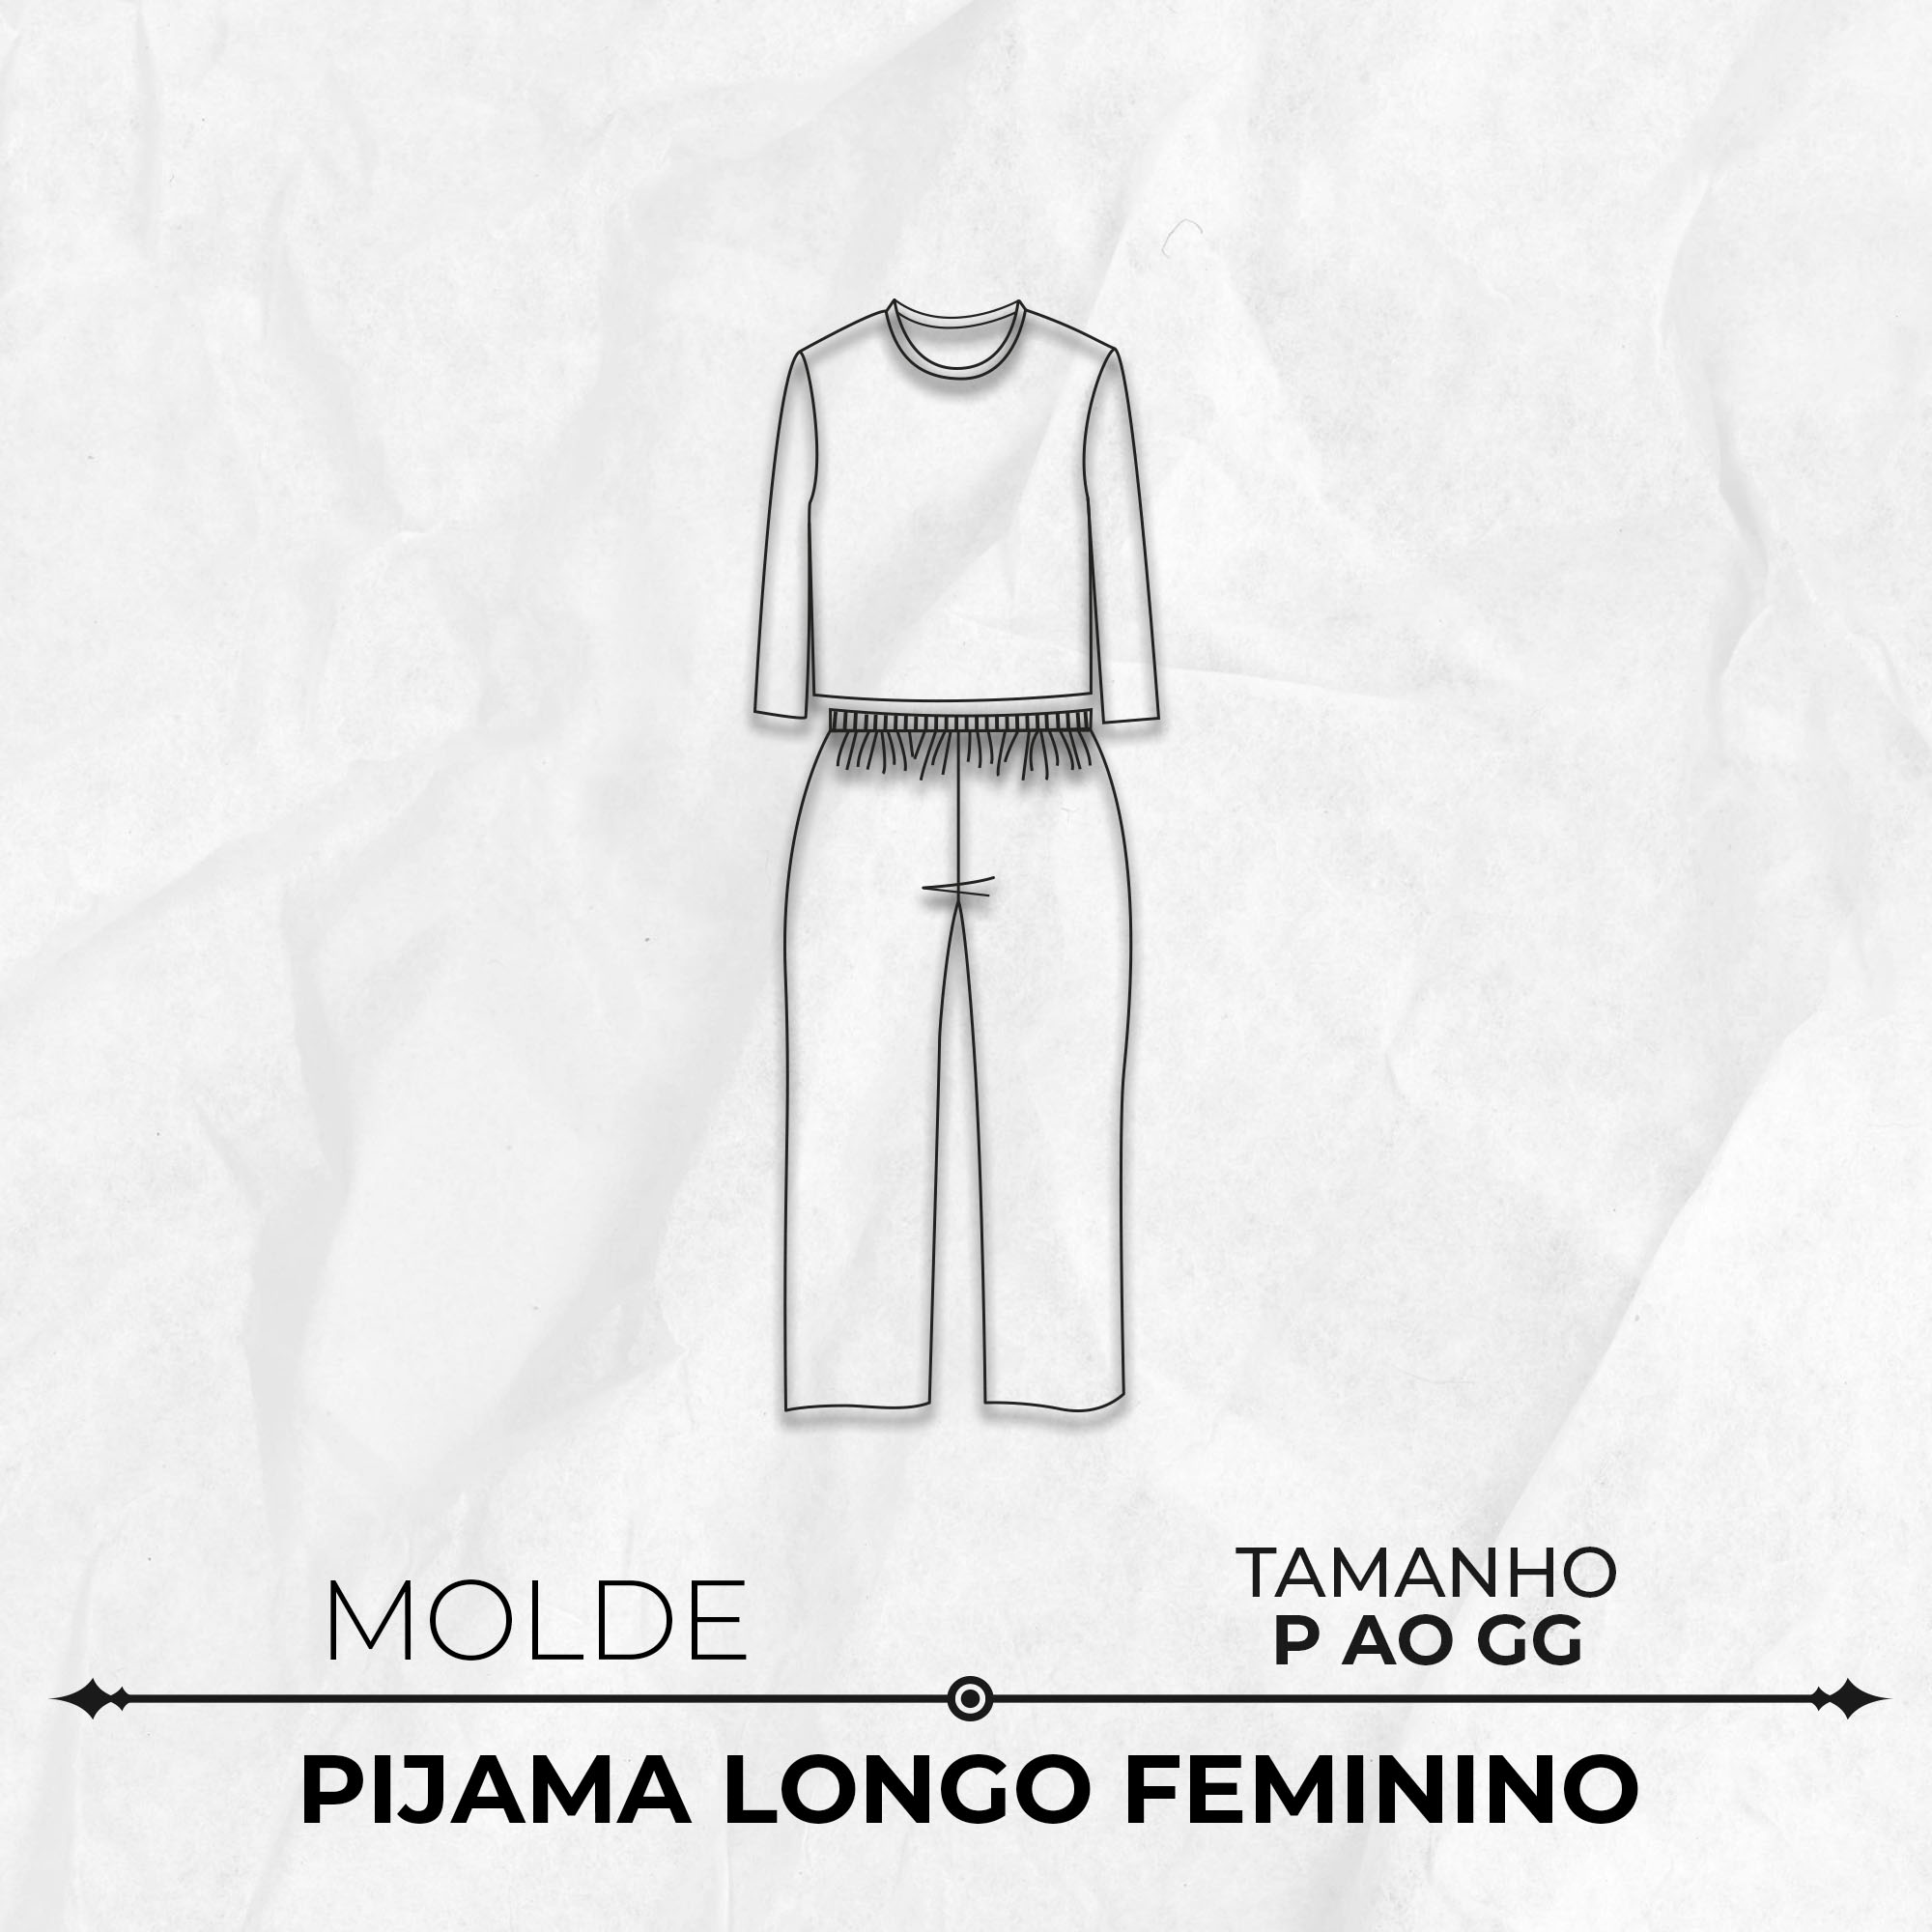 Molde pijama longo feminino tamanho P ao GG by Marlene Mukai